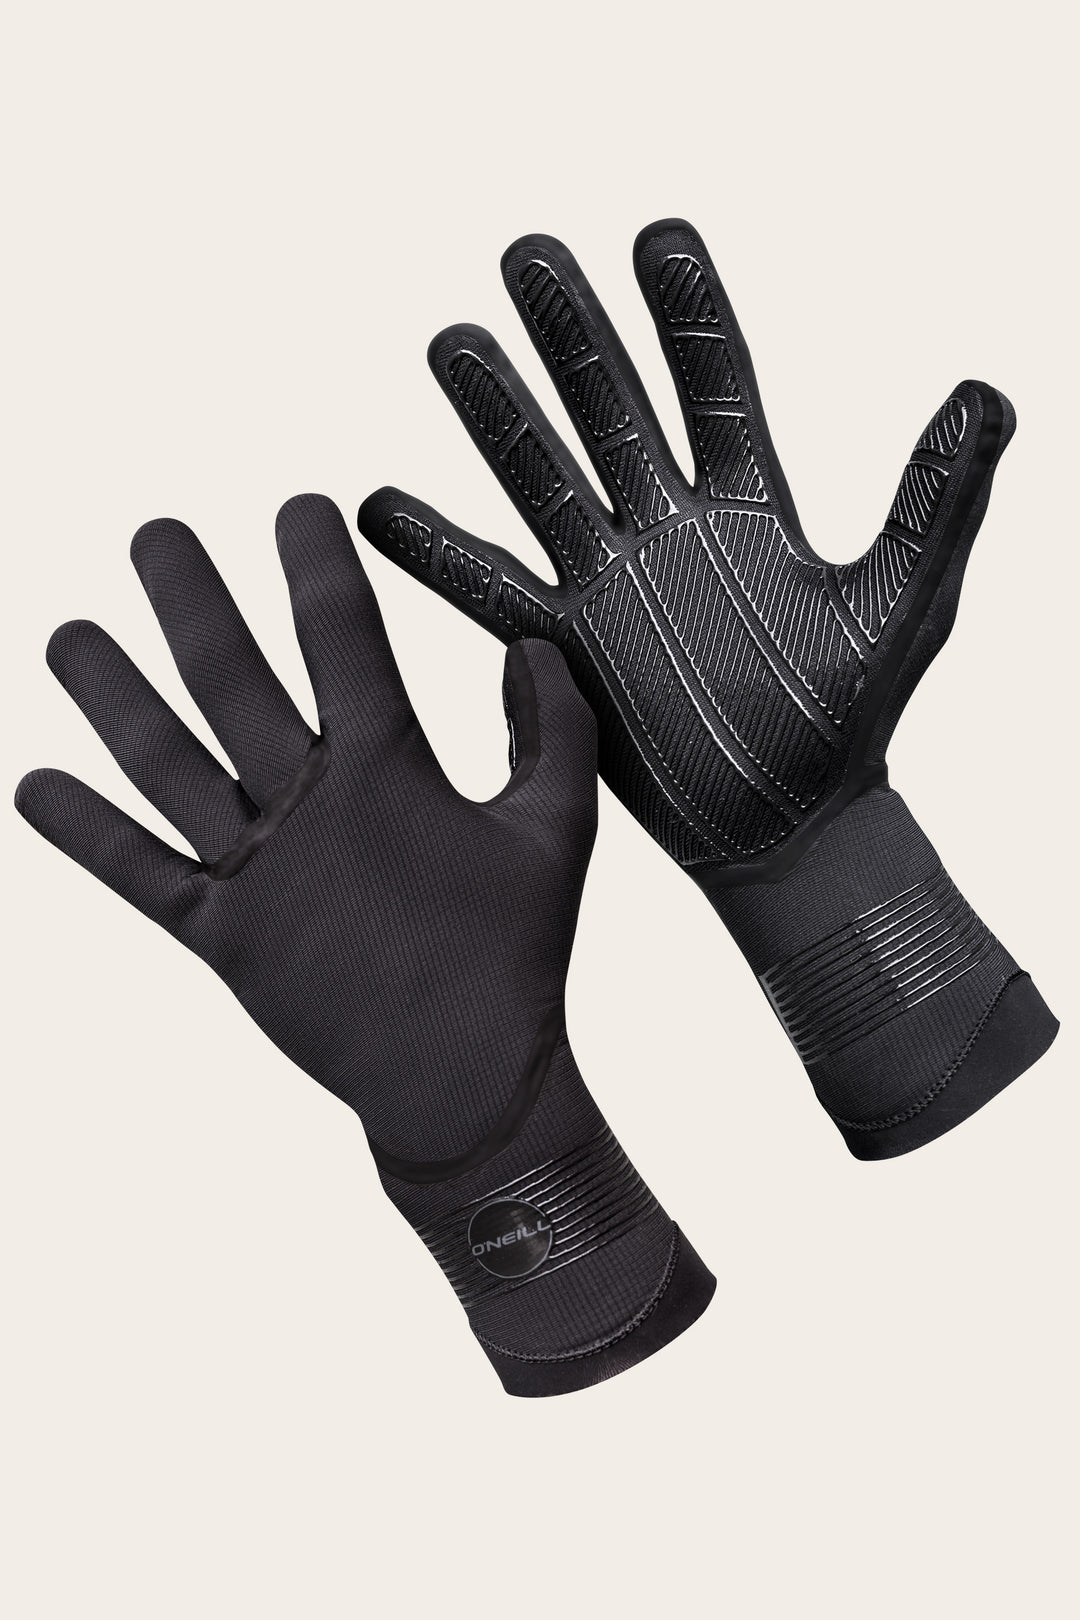 Psycho Tech 3mm Glove-O'Neill-black,cover,gloves,logo,o'neill,oneill wetsuit,wetsuit